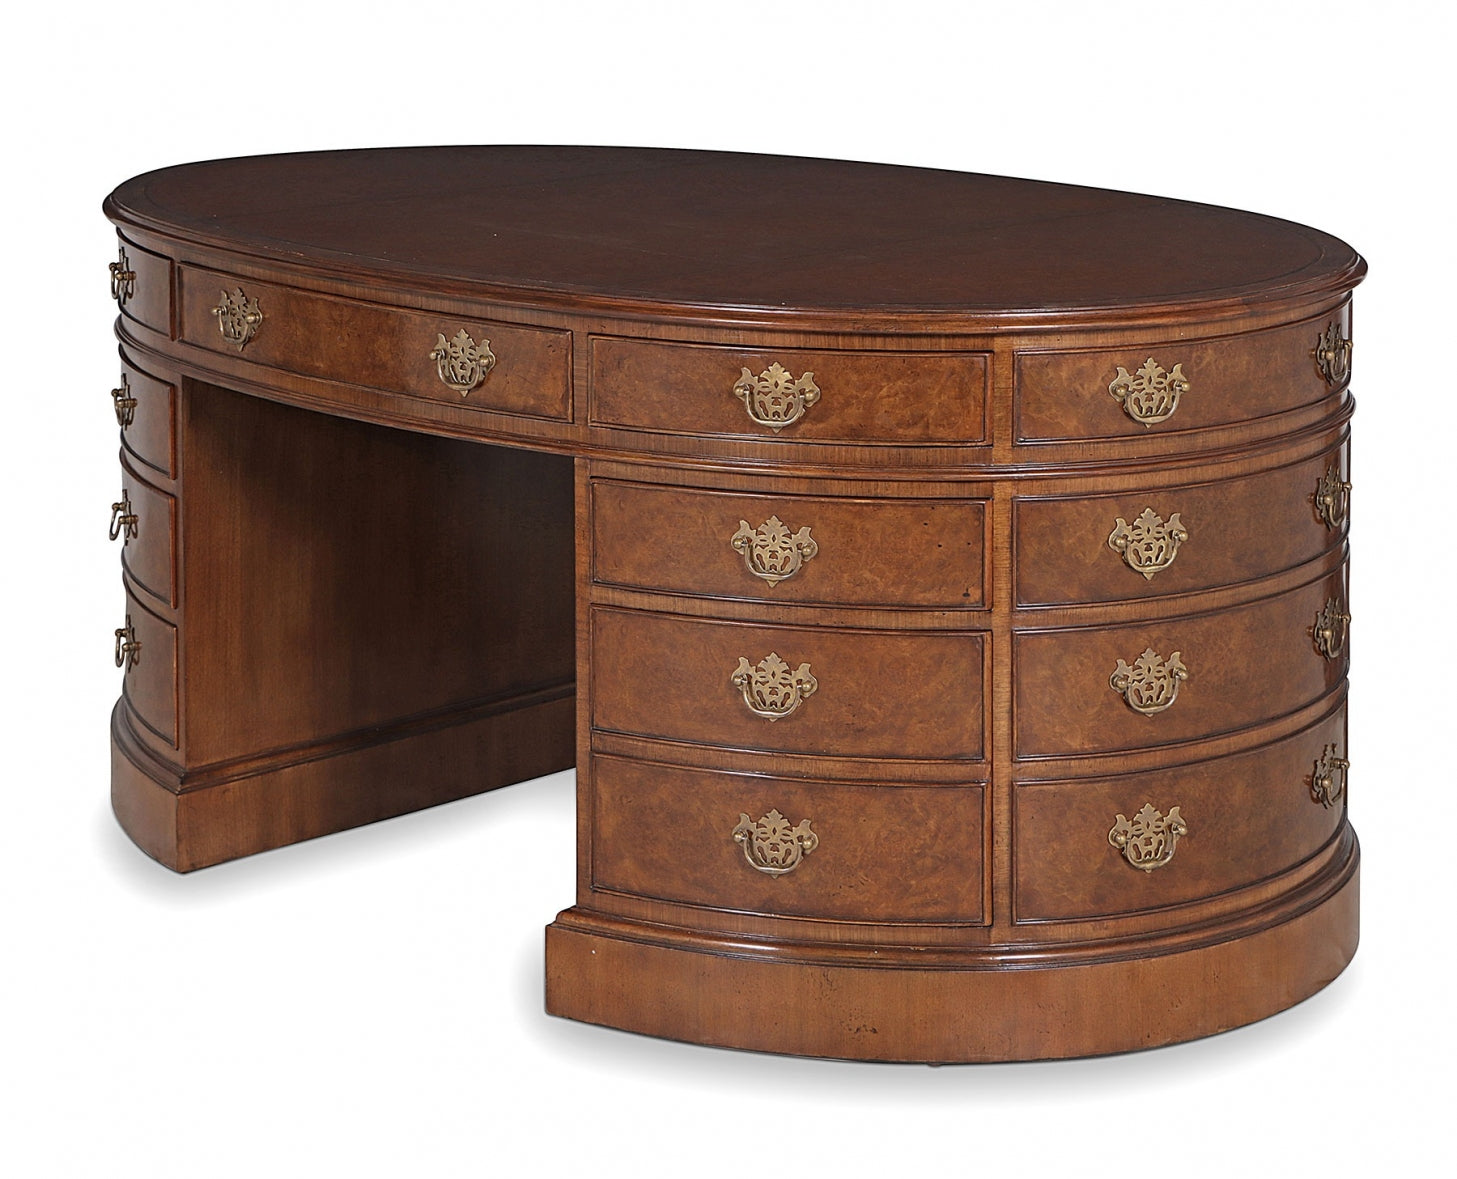 Burr walnut oval partners pedestal desk